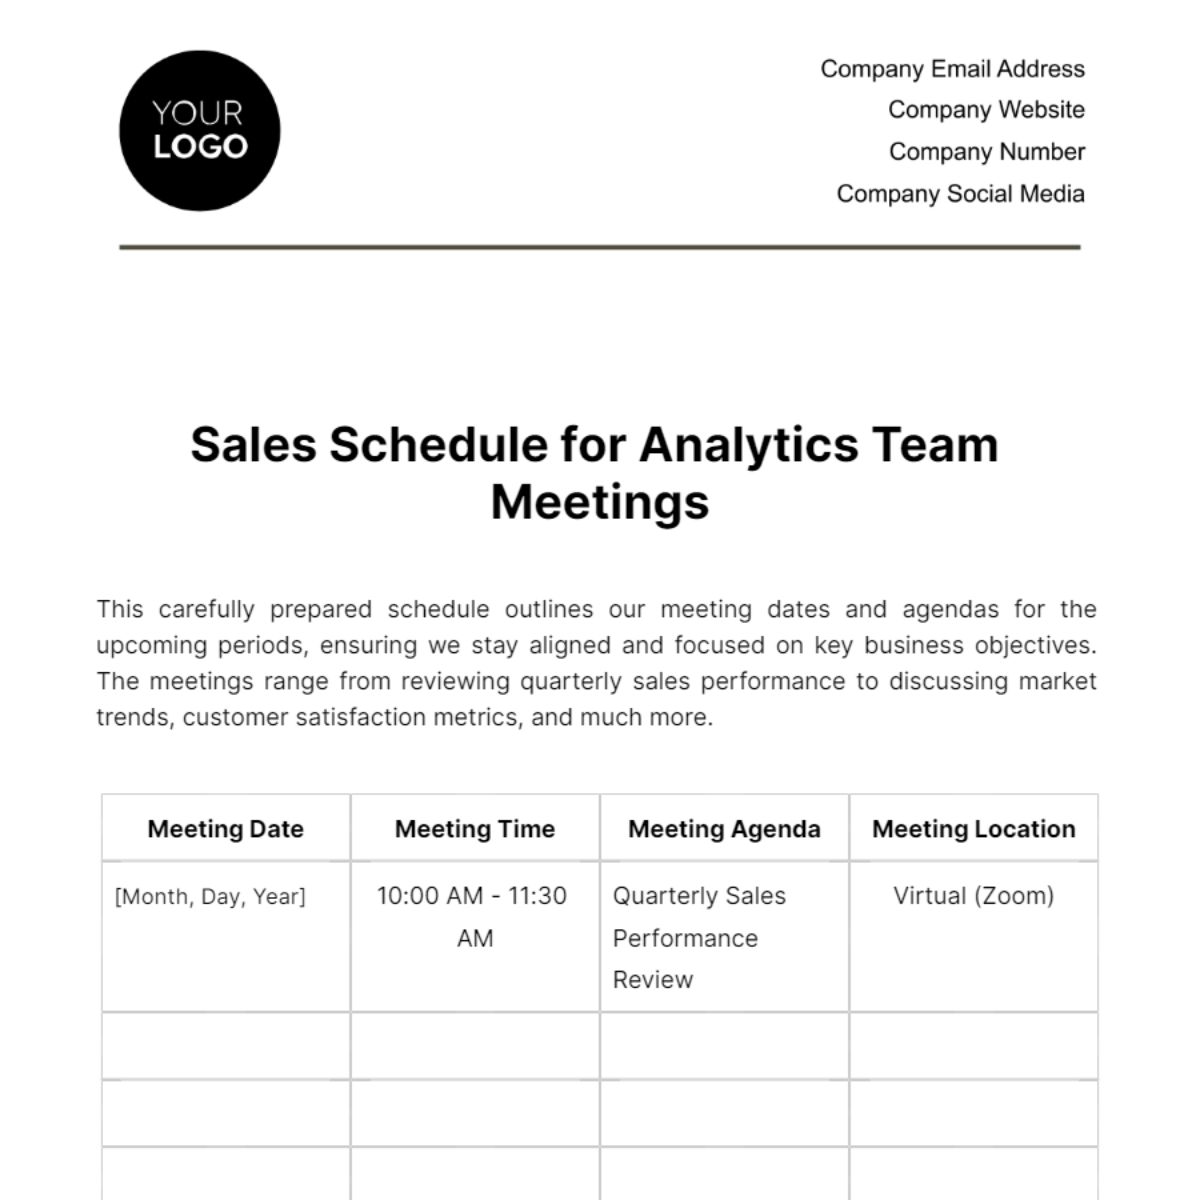 Sales Schedule for Analytics Team Meetings Template